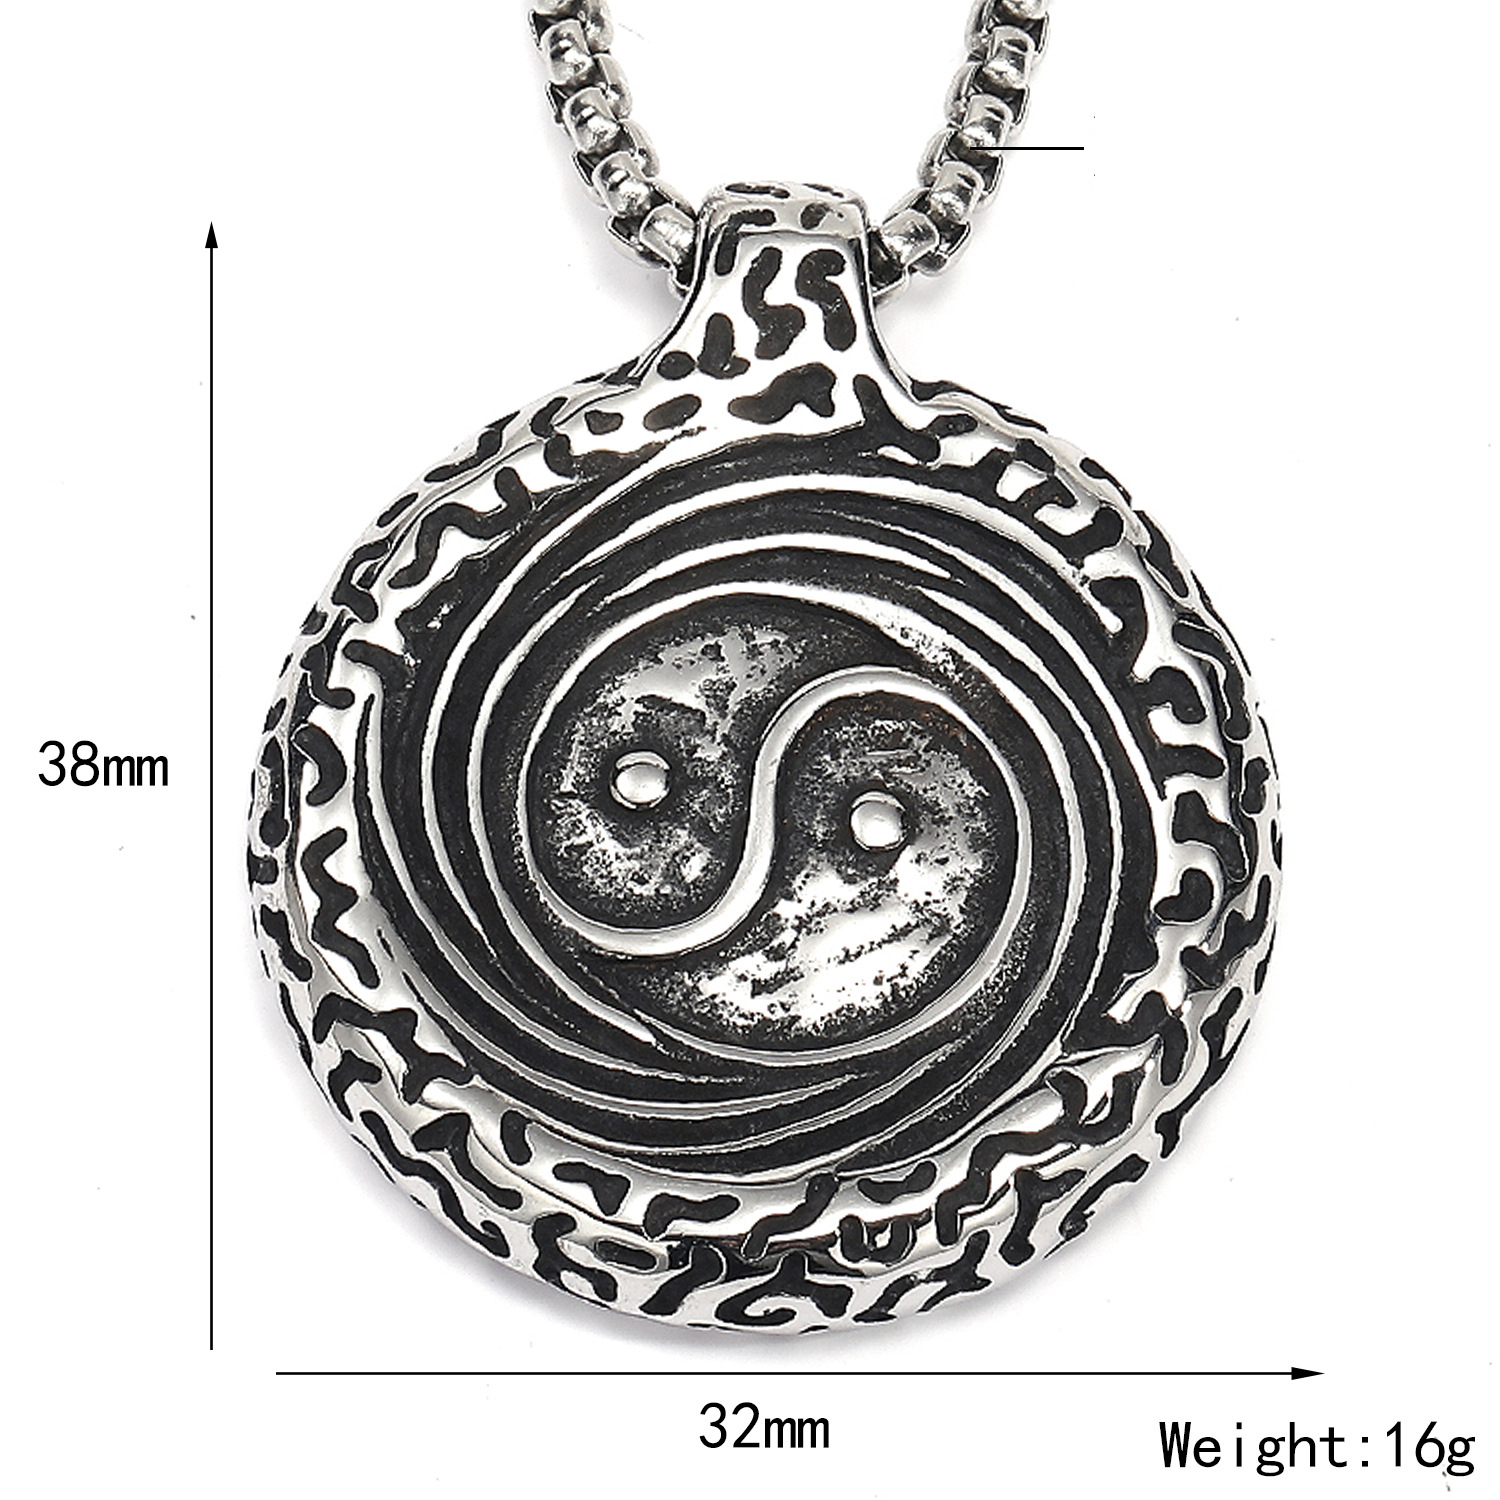 1:Steel colored pendant